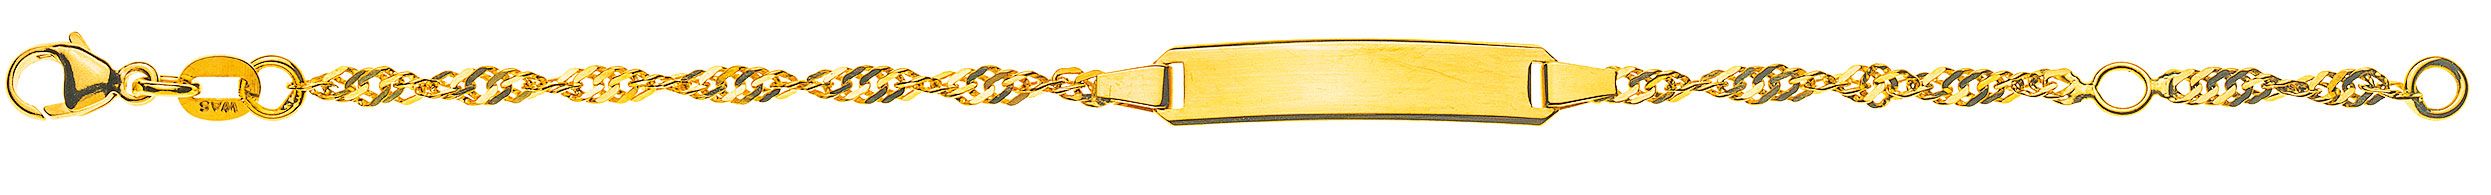 AURONOS Prestige ID bracelet 18k yellow gold Singapore chain 16cm